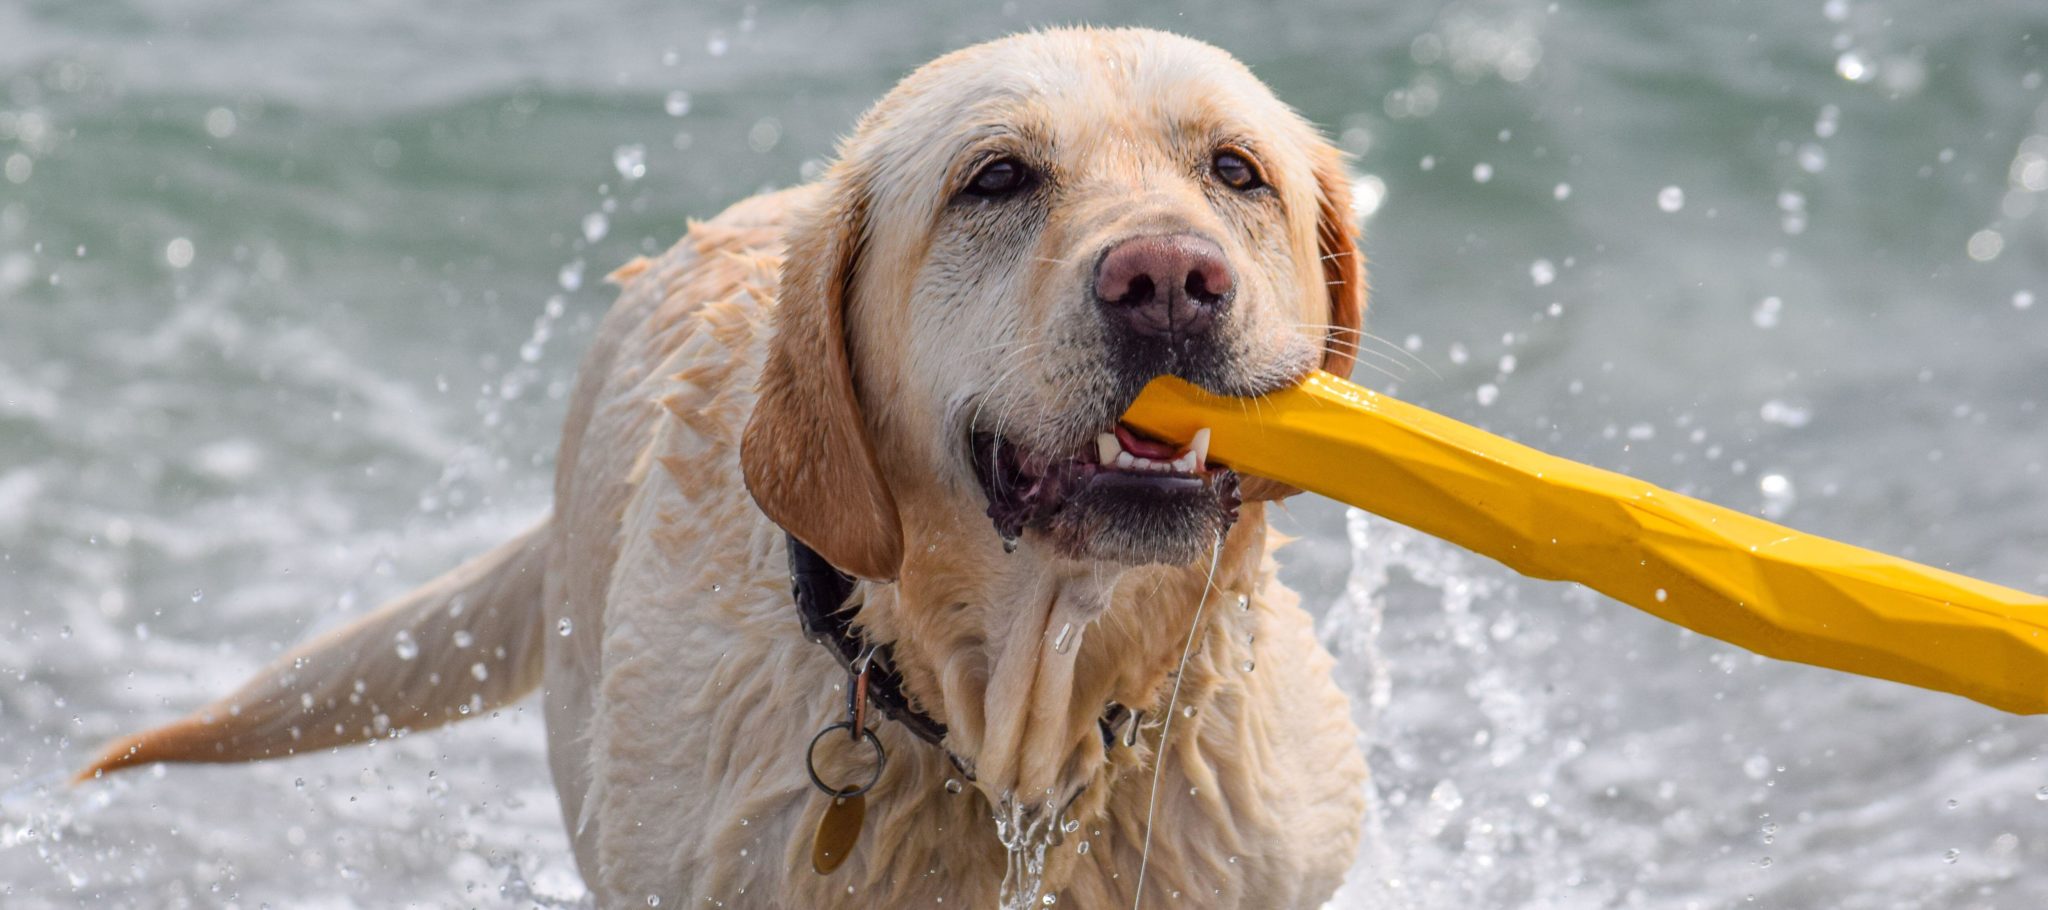 A doggo on Vault beach. Image: Artofoto / Alamy Stock Photo